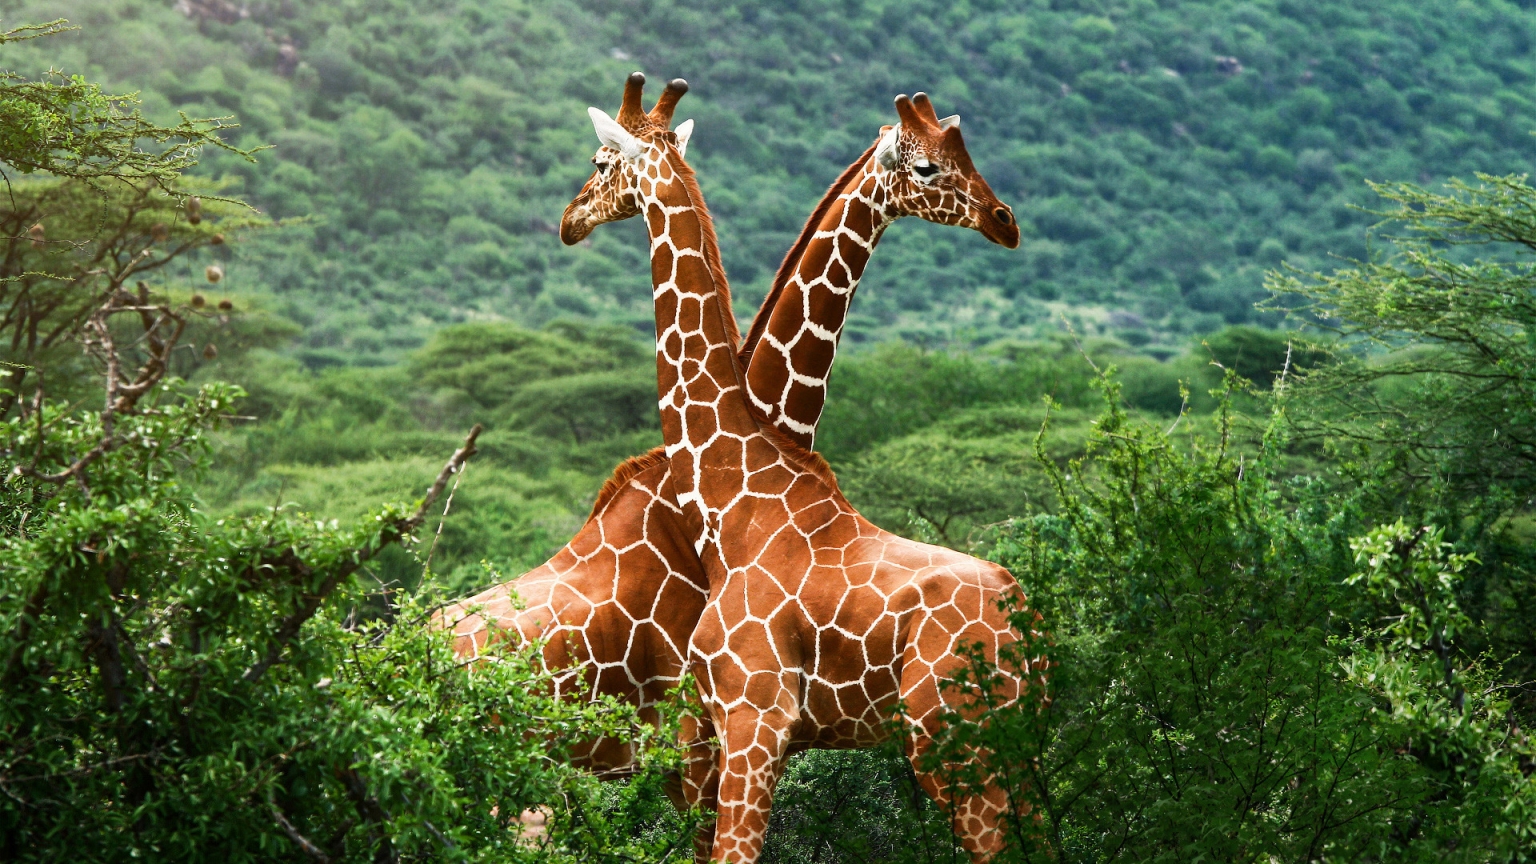 Giraffe Friends for 1536 x 864 HDTV resolution